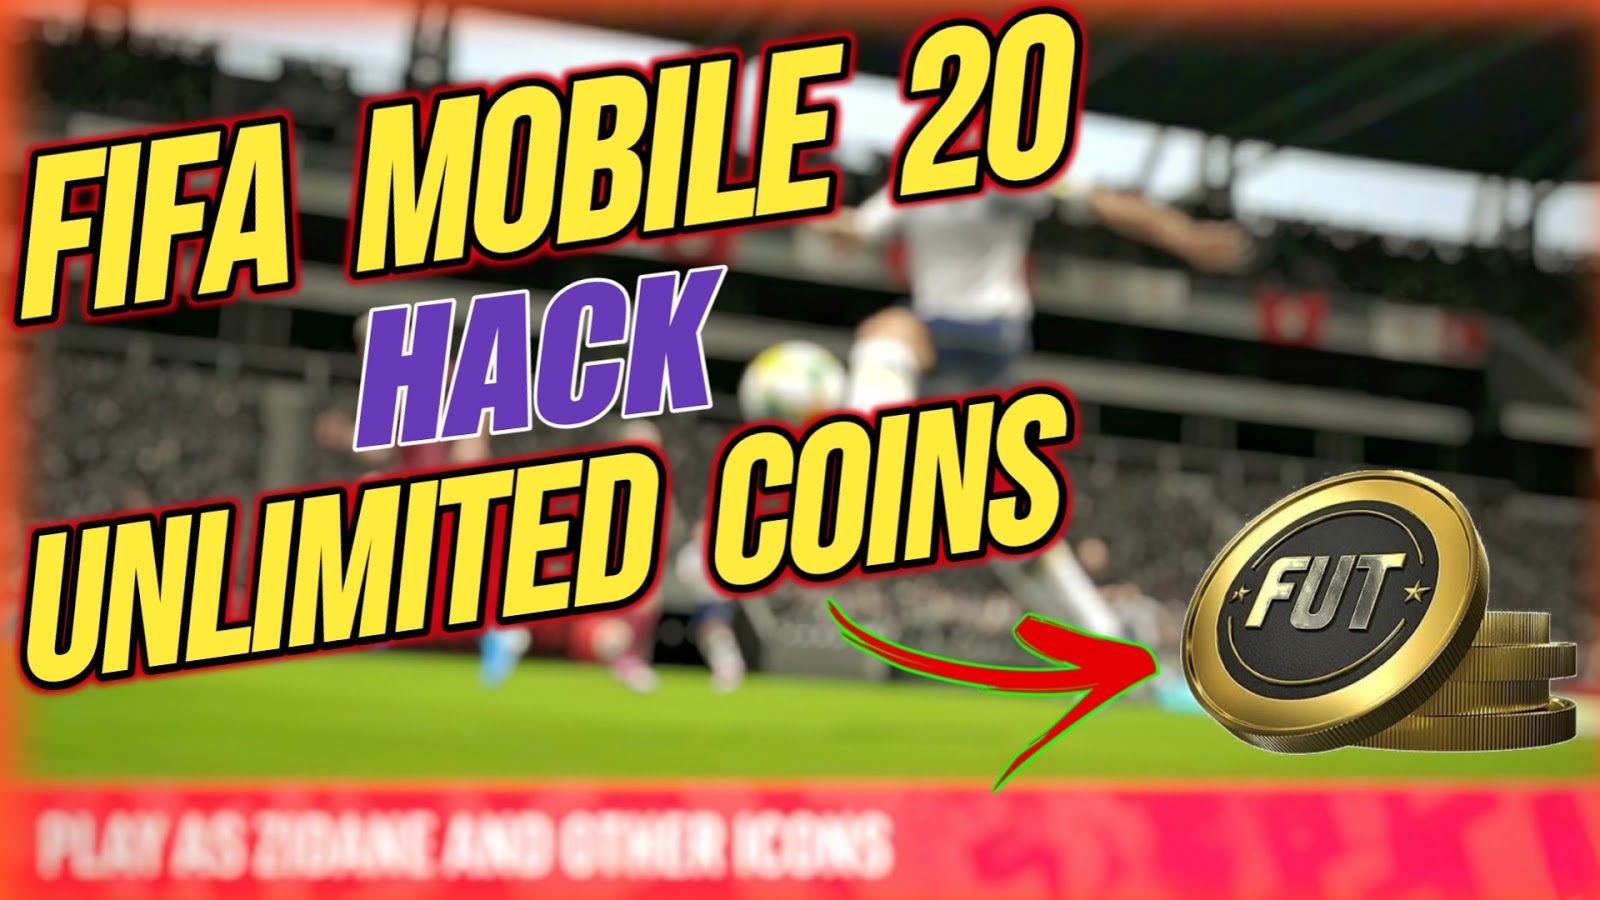 Fifa Mobile 20 Hack 13.1.13 Unlimited Coins Fifa Soccer 20 Mod Apk 13